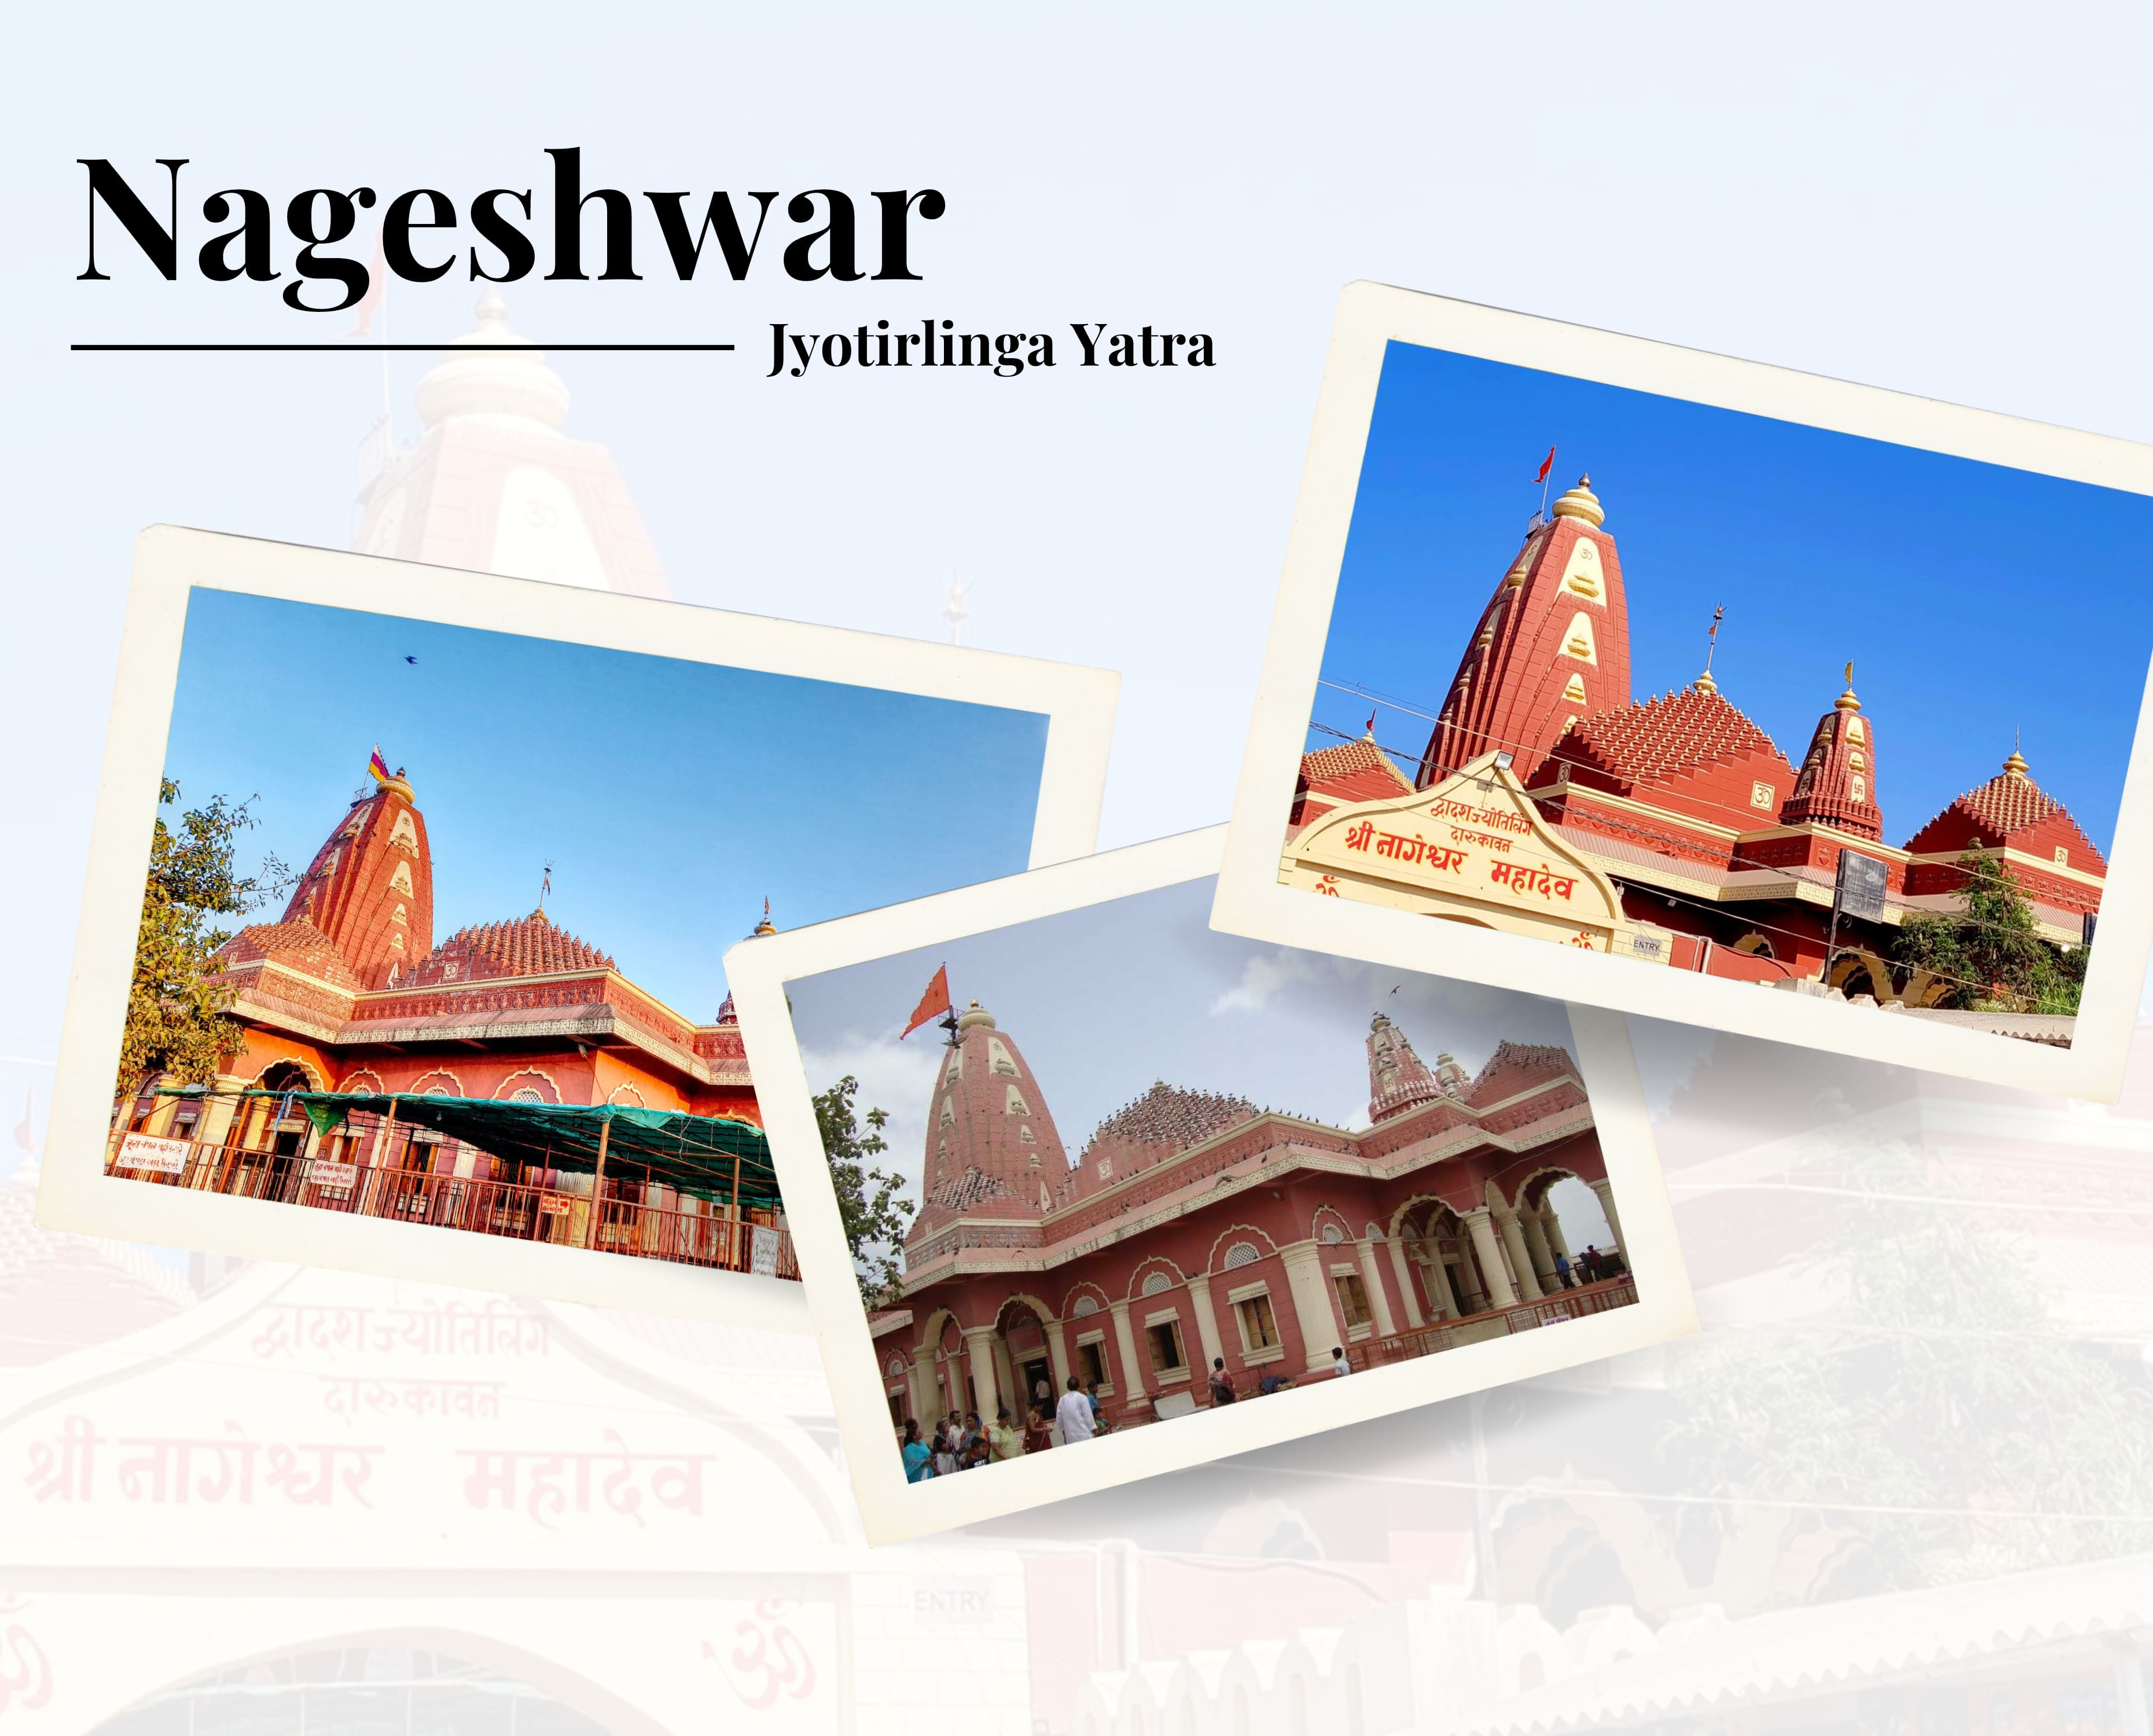 Hire a Tempo Traveller For Nageshwar Jyotirlinga Yatra